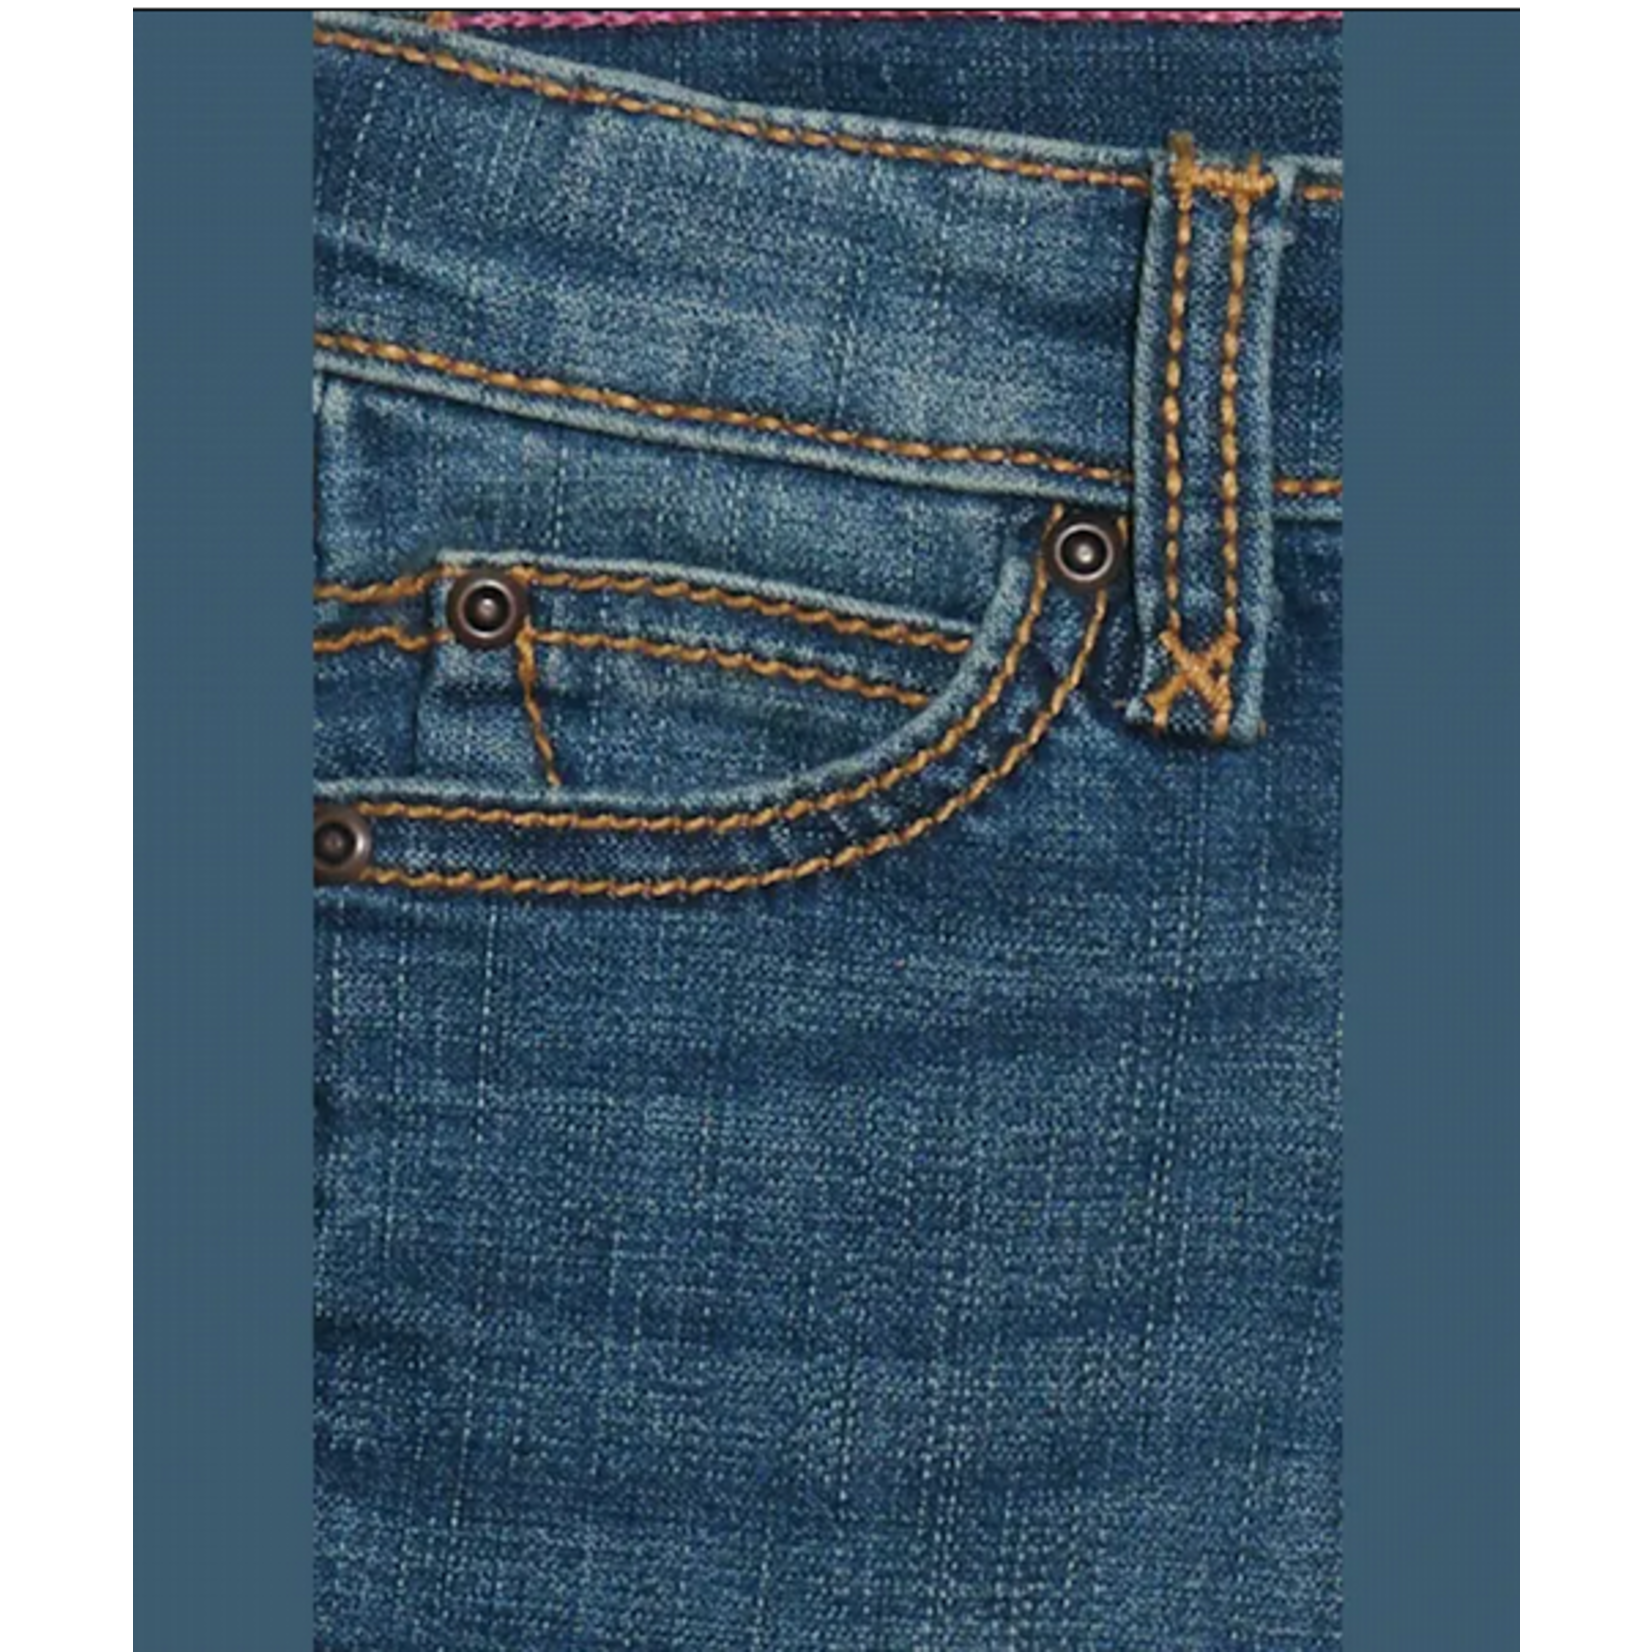 Wrangler Wrangler 09MWGMS Girls' Dark Wash With Stitch Patch Boot Cut Jeans